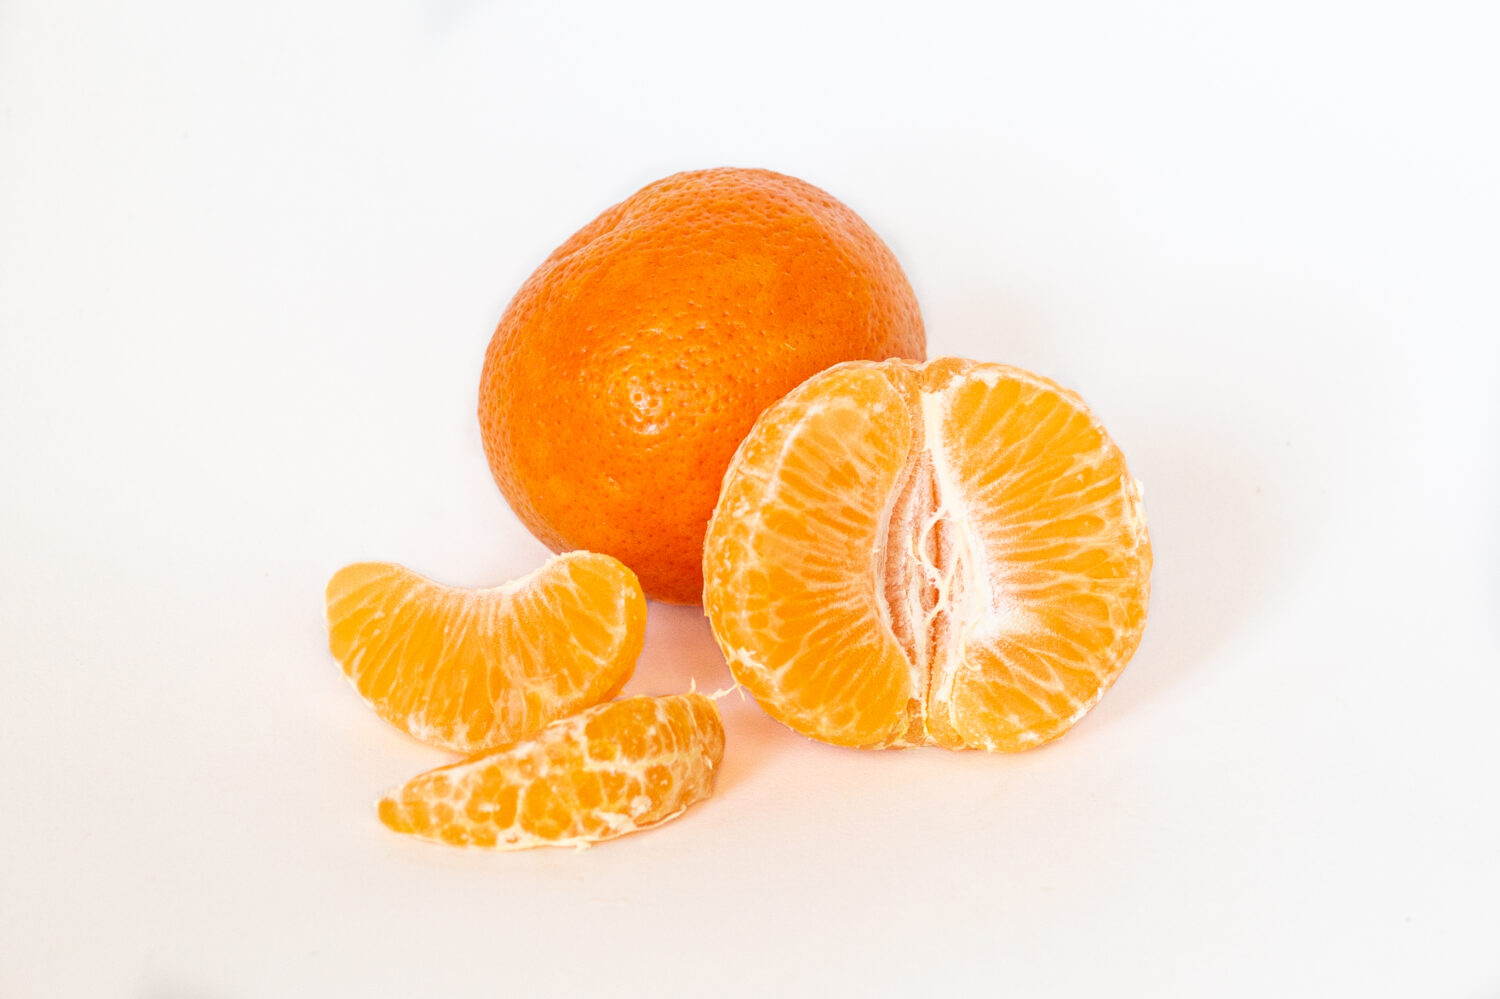 Delizioso mandarino fresco e succoso, Naartjie sbucciato